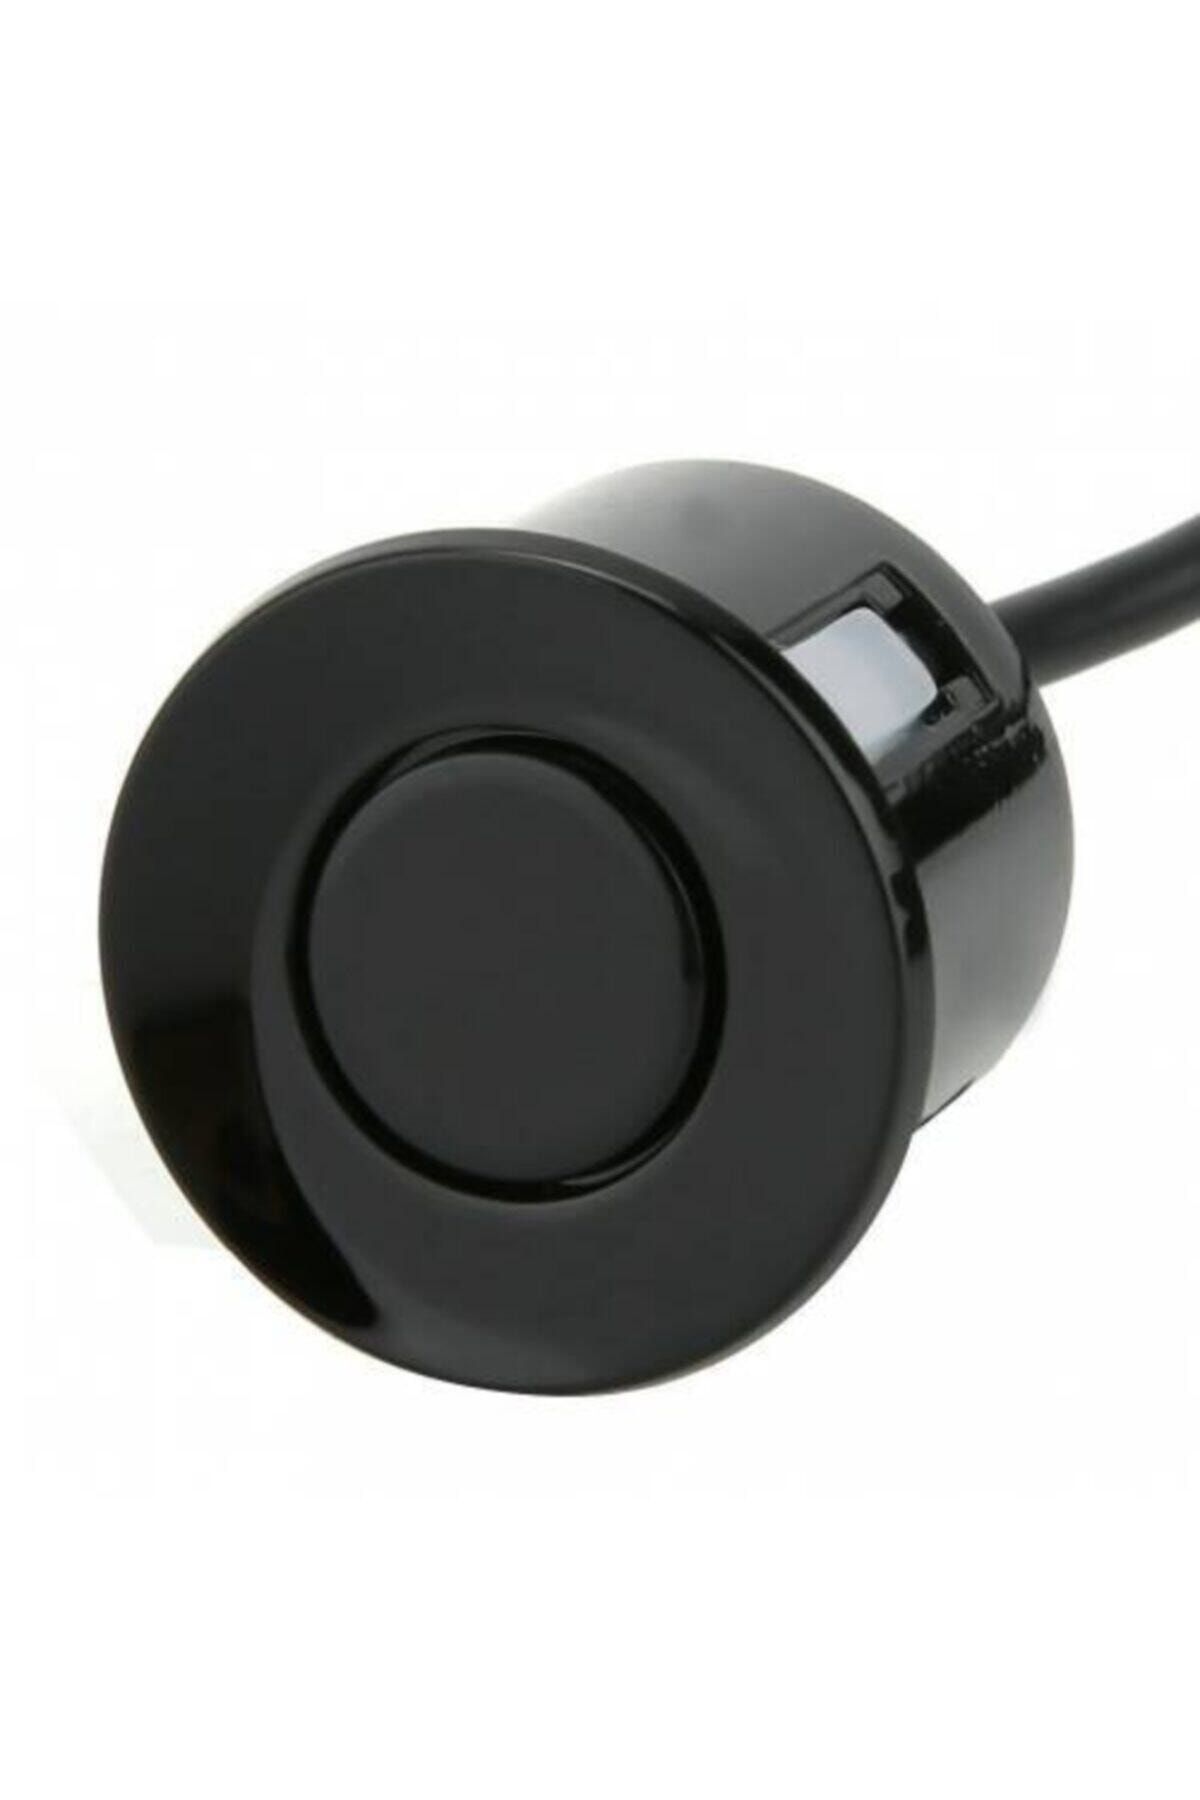 Bm Audio Yedek Park Sensörü Gözü 1çift - 18.5mm Siyah